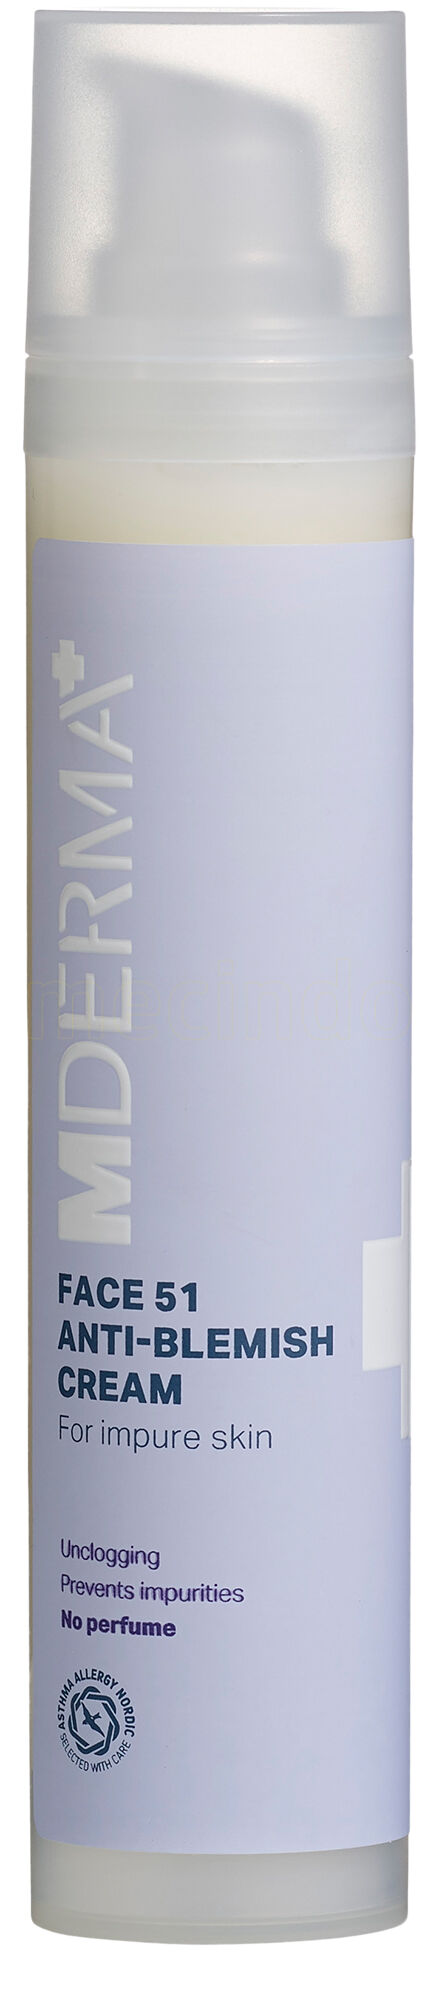 MDerma Face51 Anti-blemish Cream - 50 ml